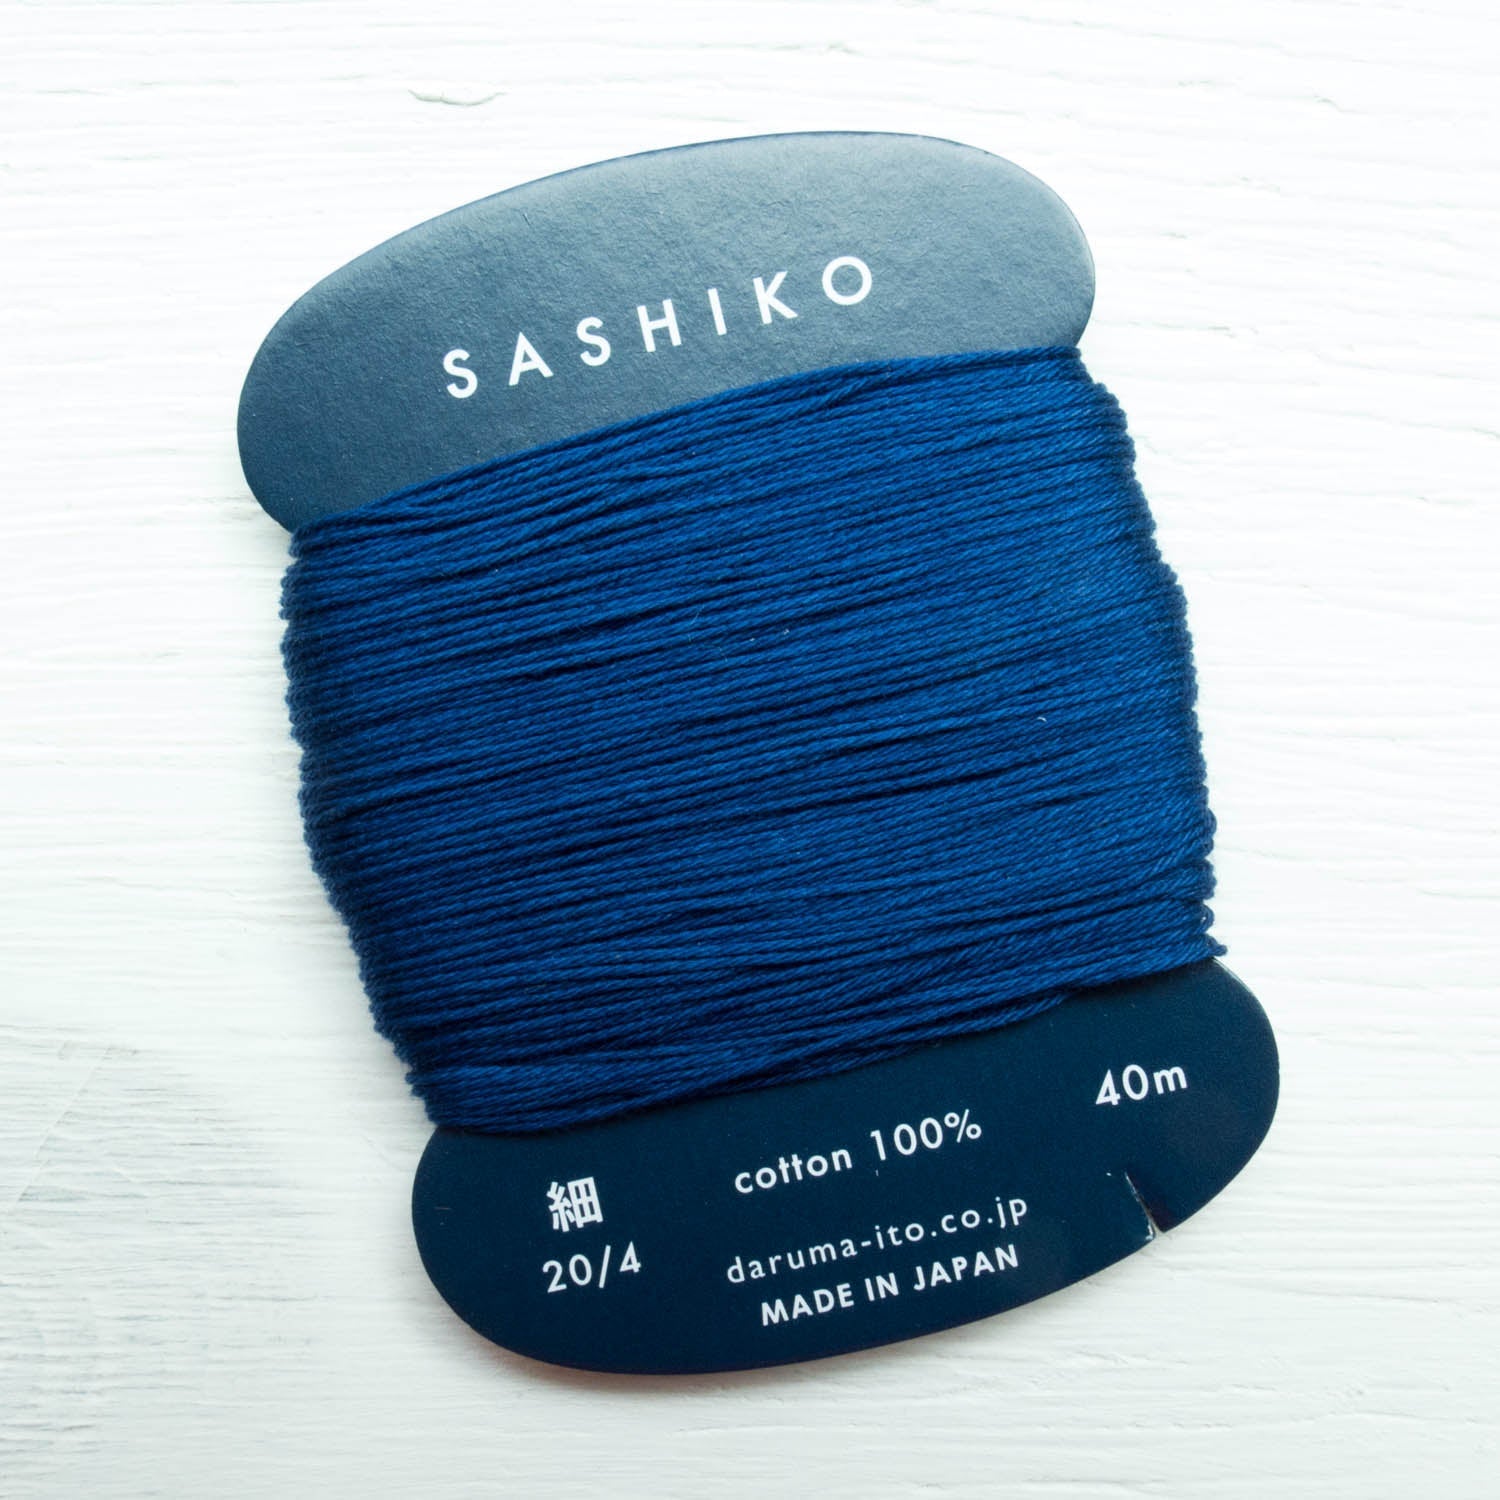 ORIM - Daruma - Sashiko Cotton Thread 20/4 - 0215 - Royal Blue